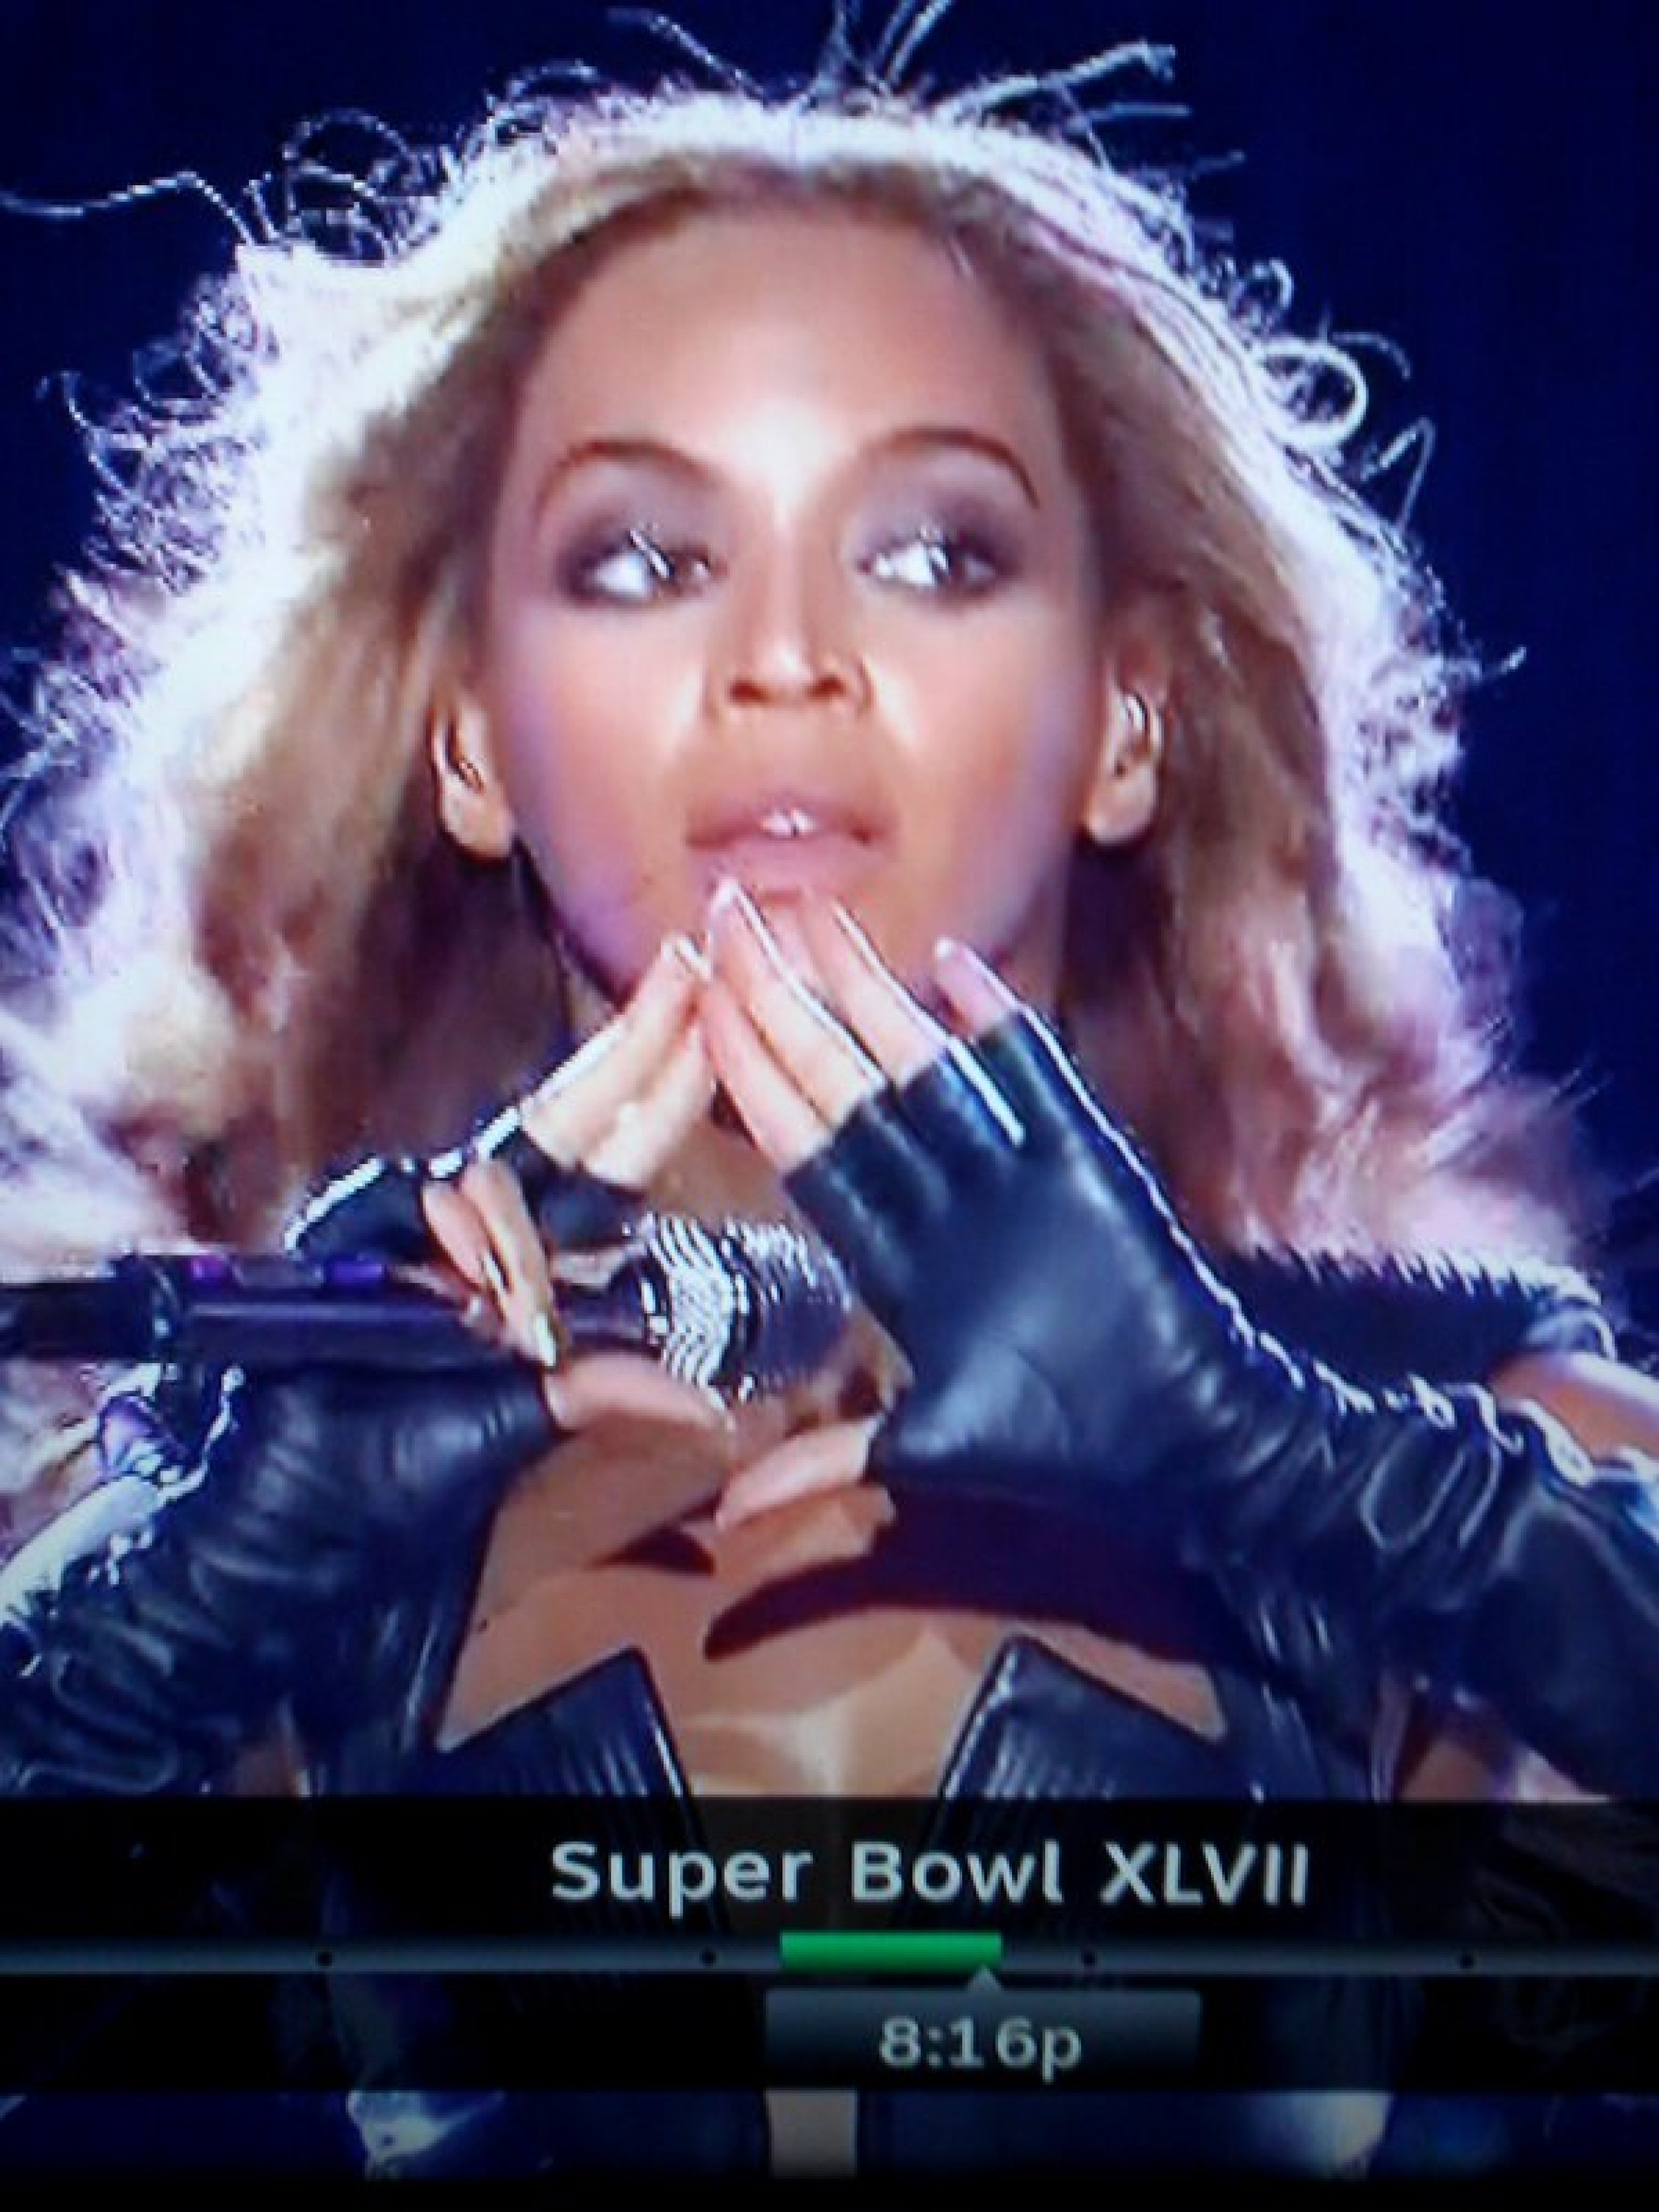 Did Beyoncé Flash Illuminati Sign During Super Bowl 2013 Halftime Show